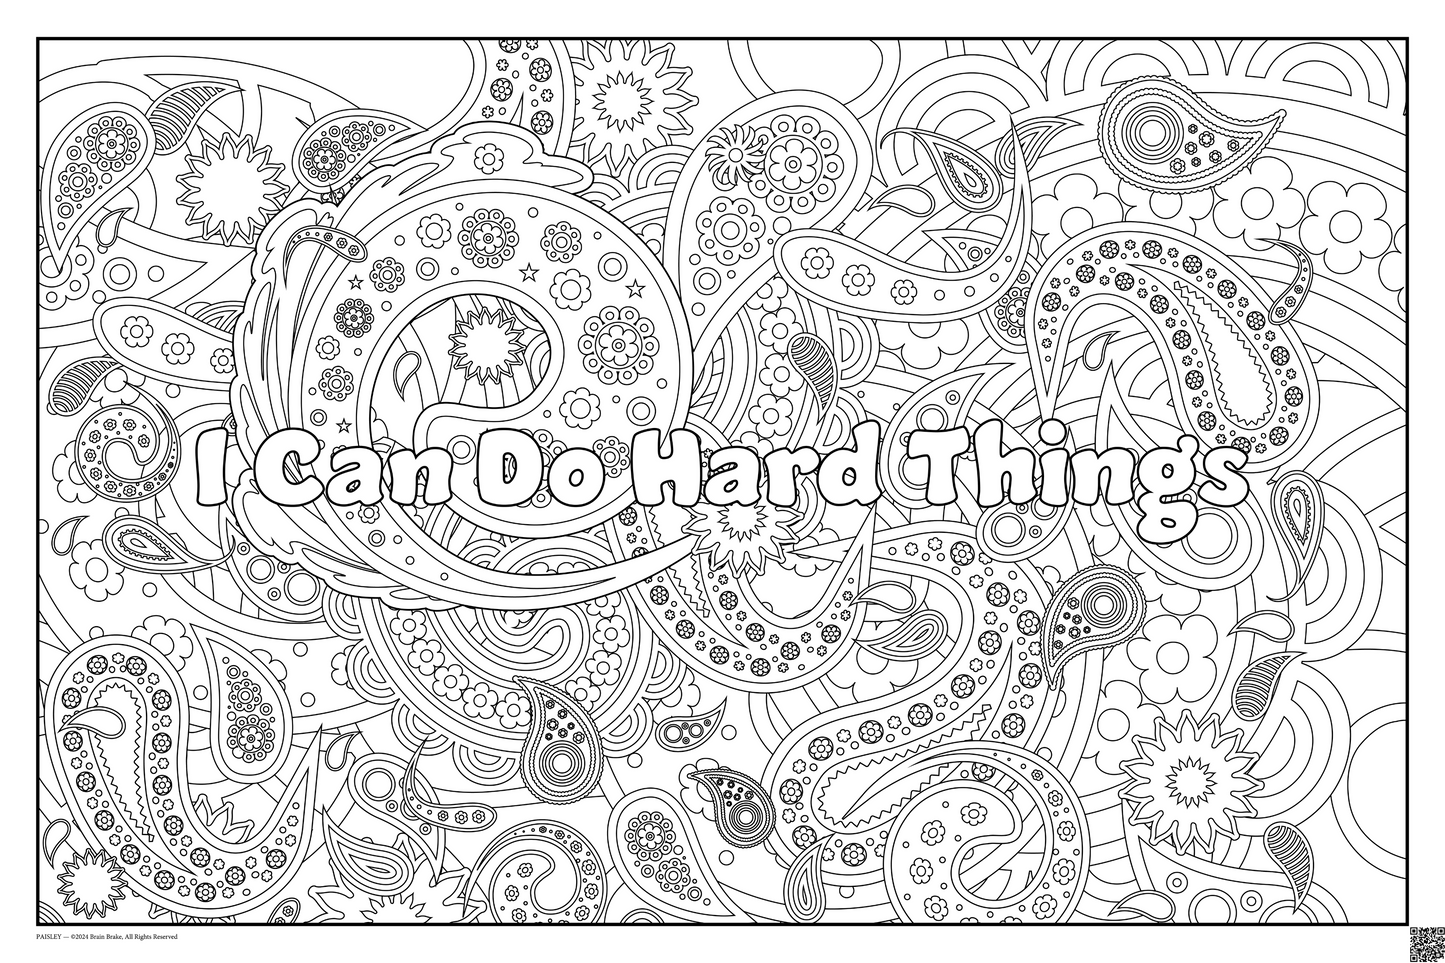 Calming Corner: I Can Do Hard Things